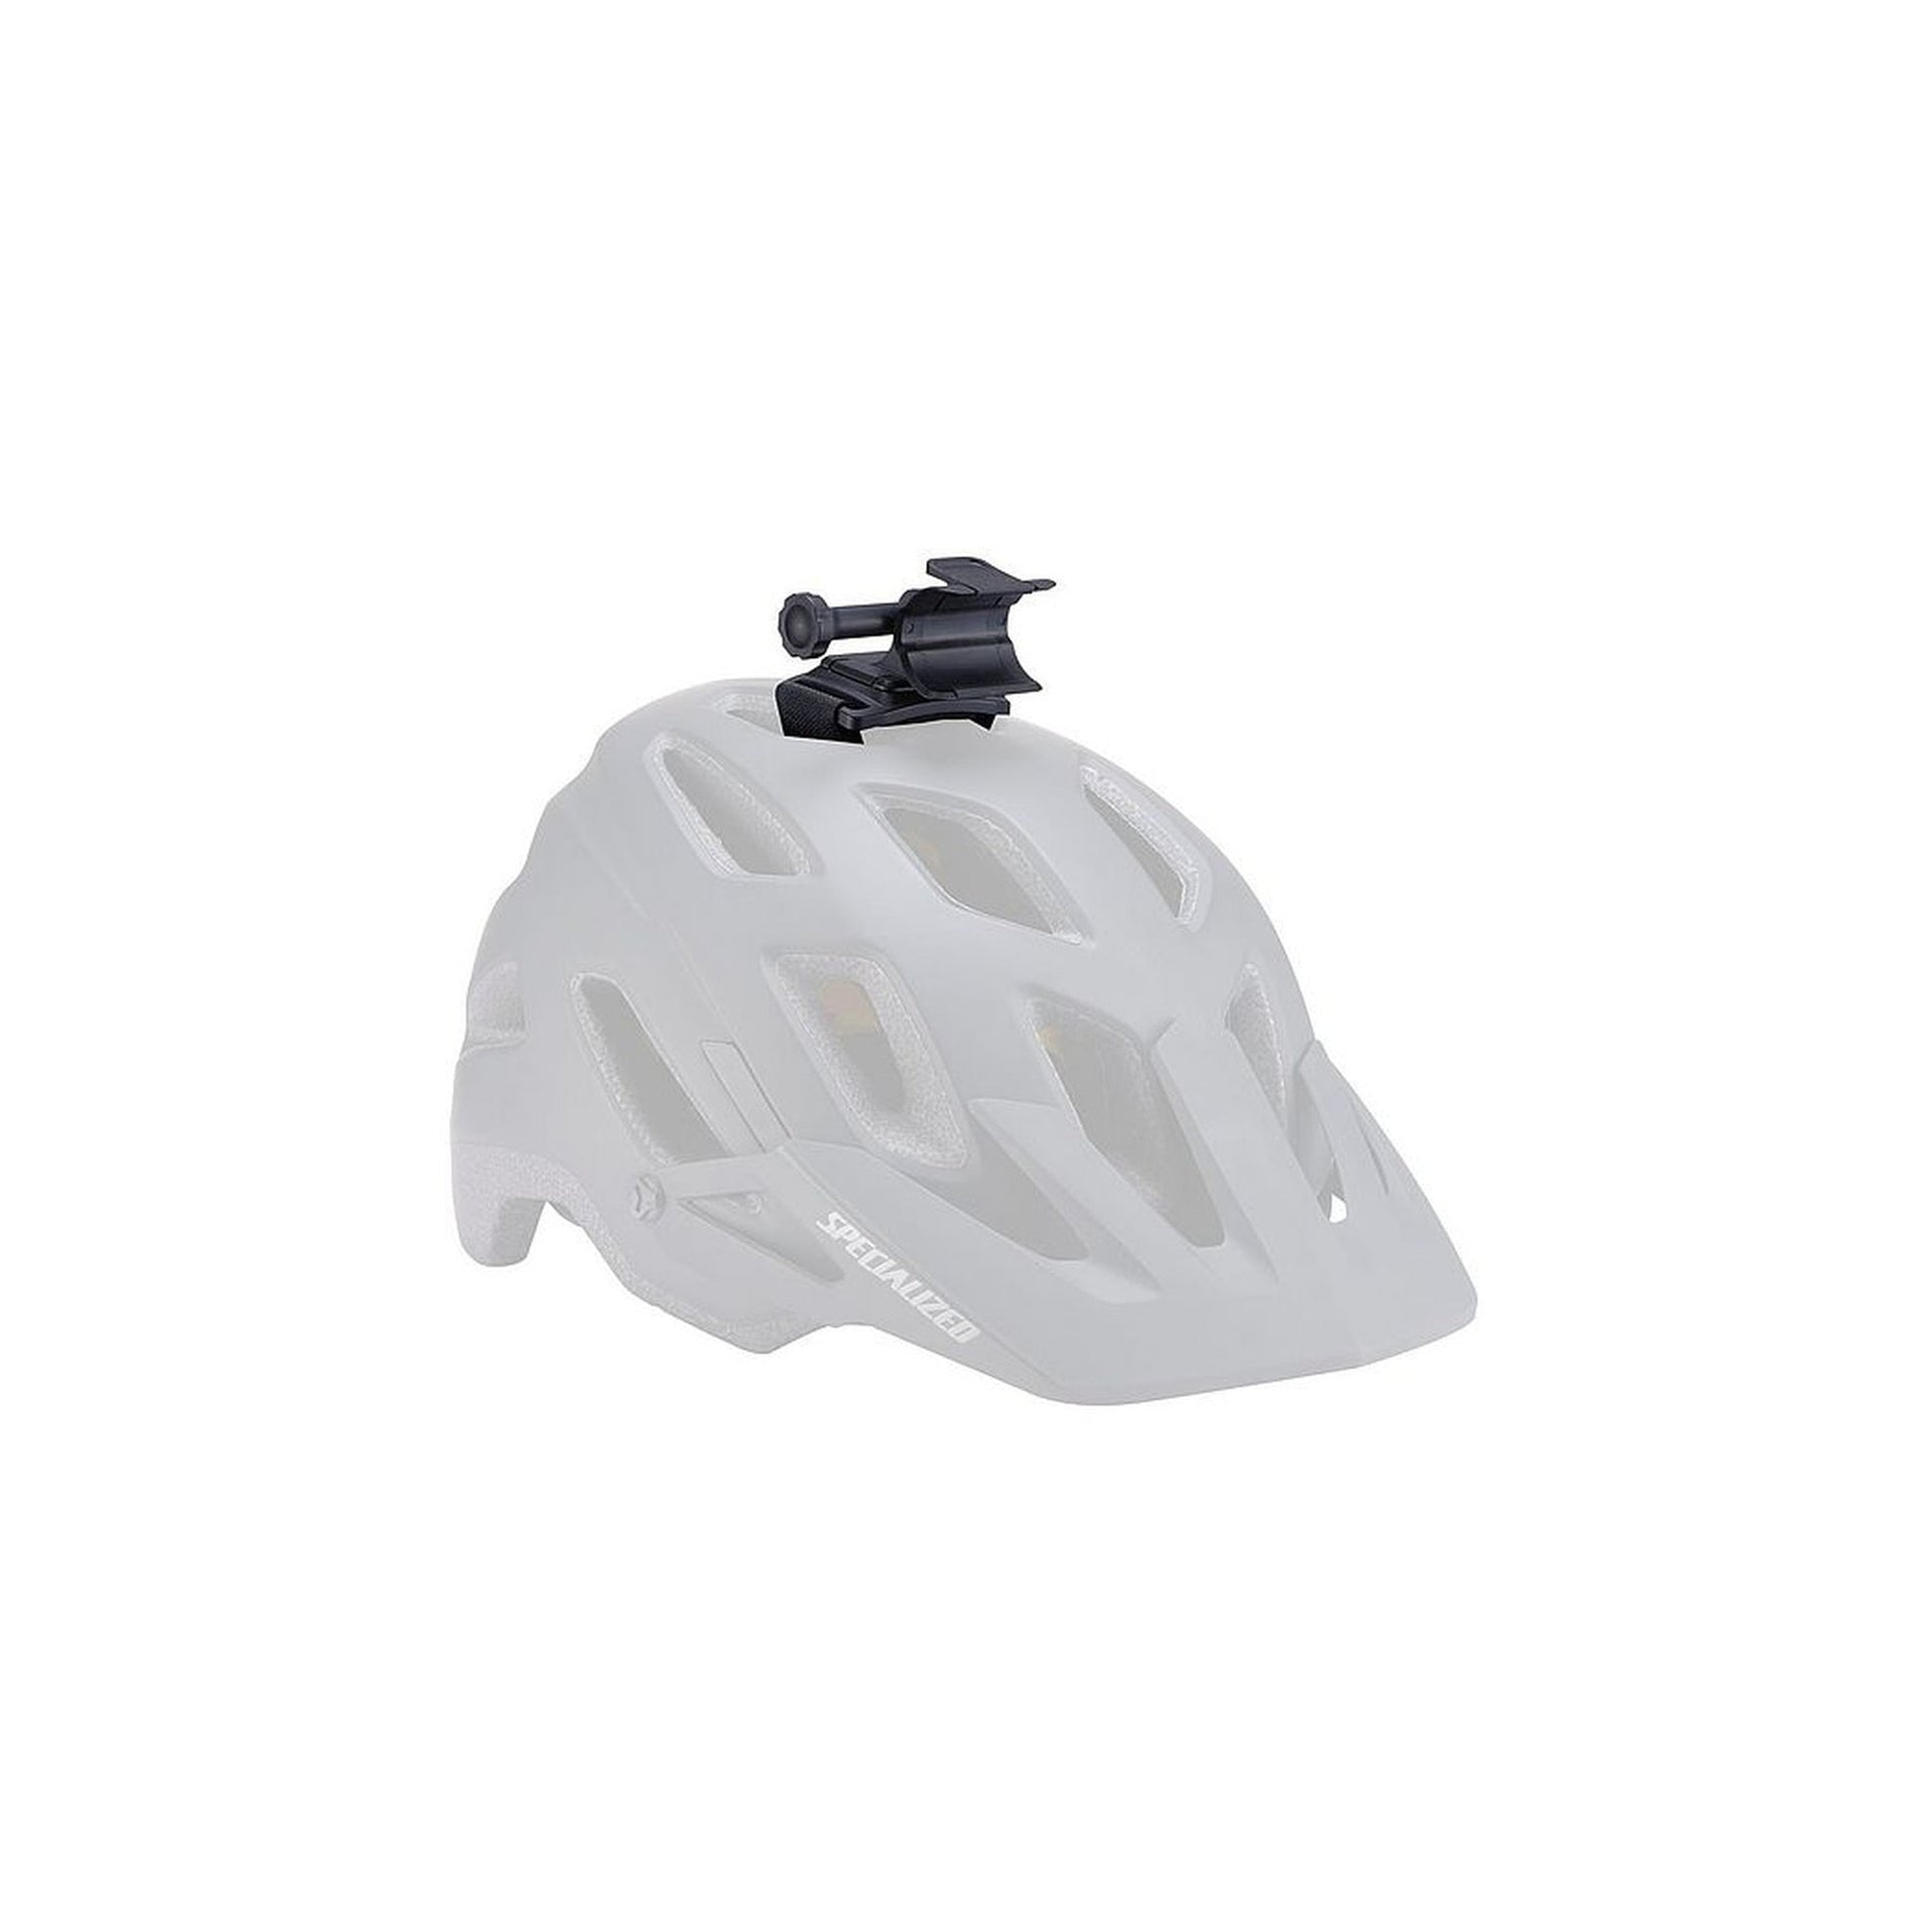 Fluxª 900/1200 Headlight Helmet Mount | completecyclist - Looking to take your second-generation Fluxª headlight off-road? You're going to need a helmet mount.